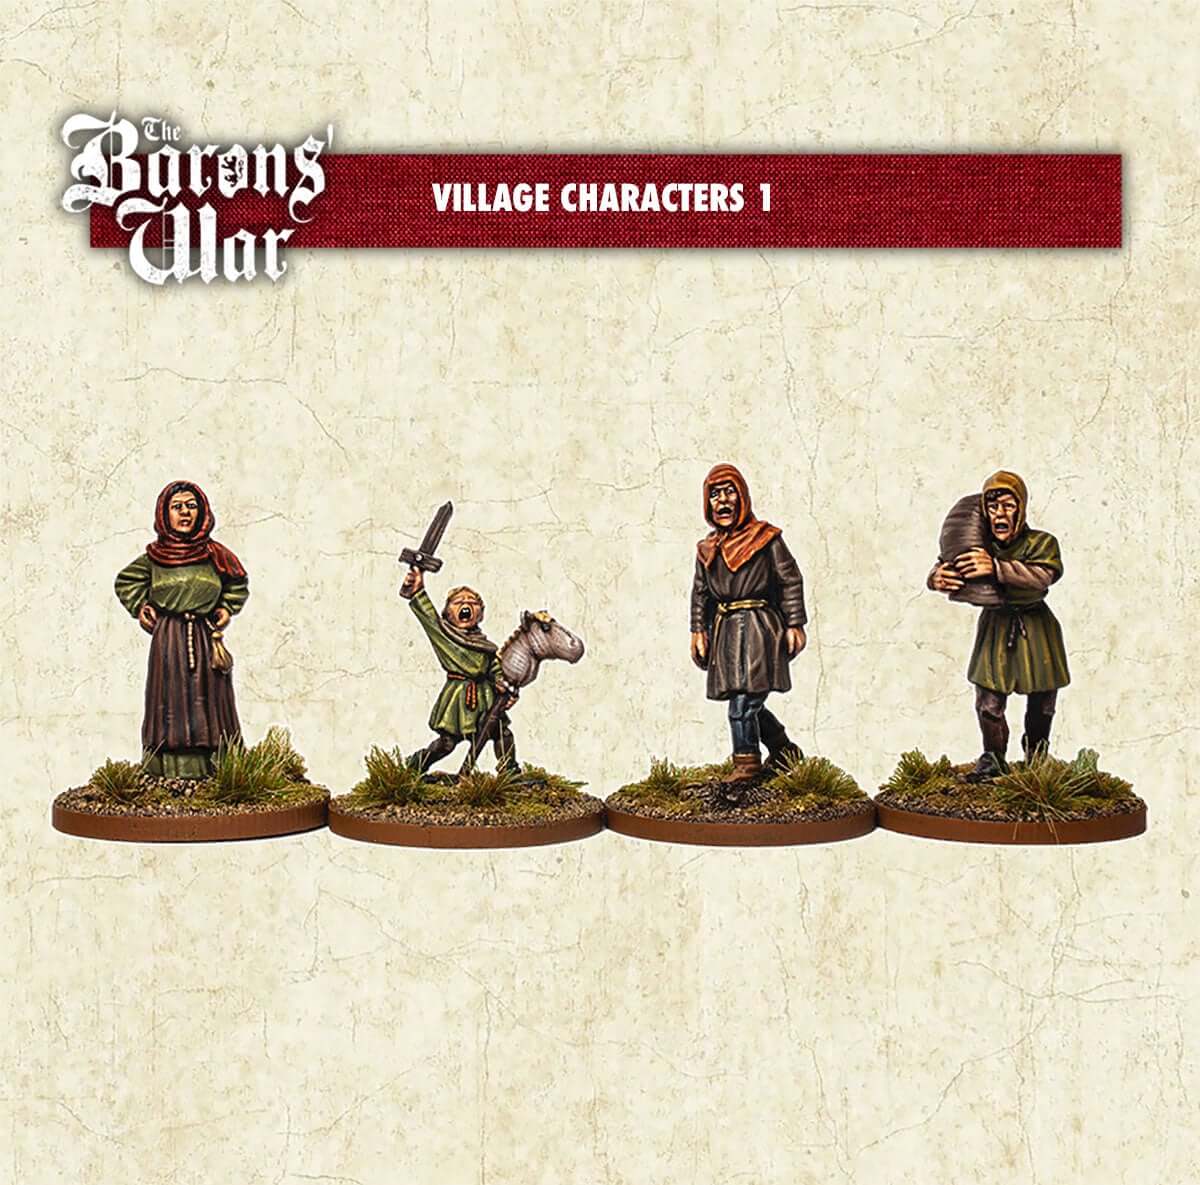 Baron's War Village Characters 1